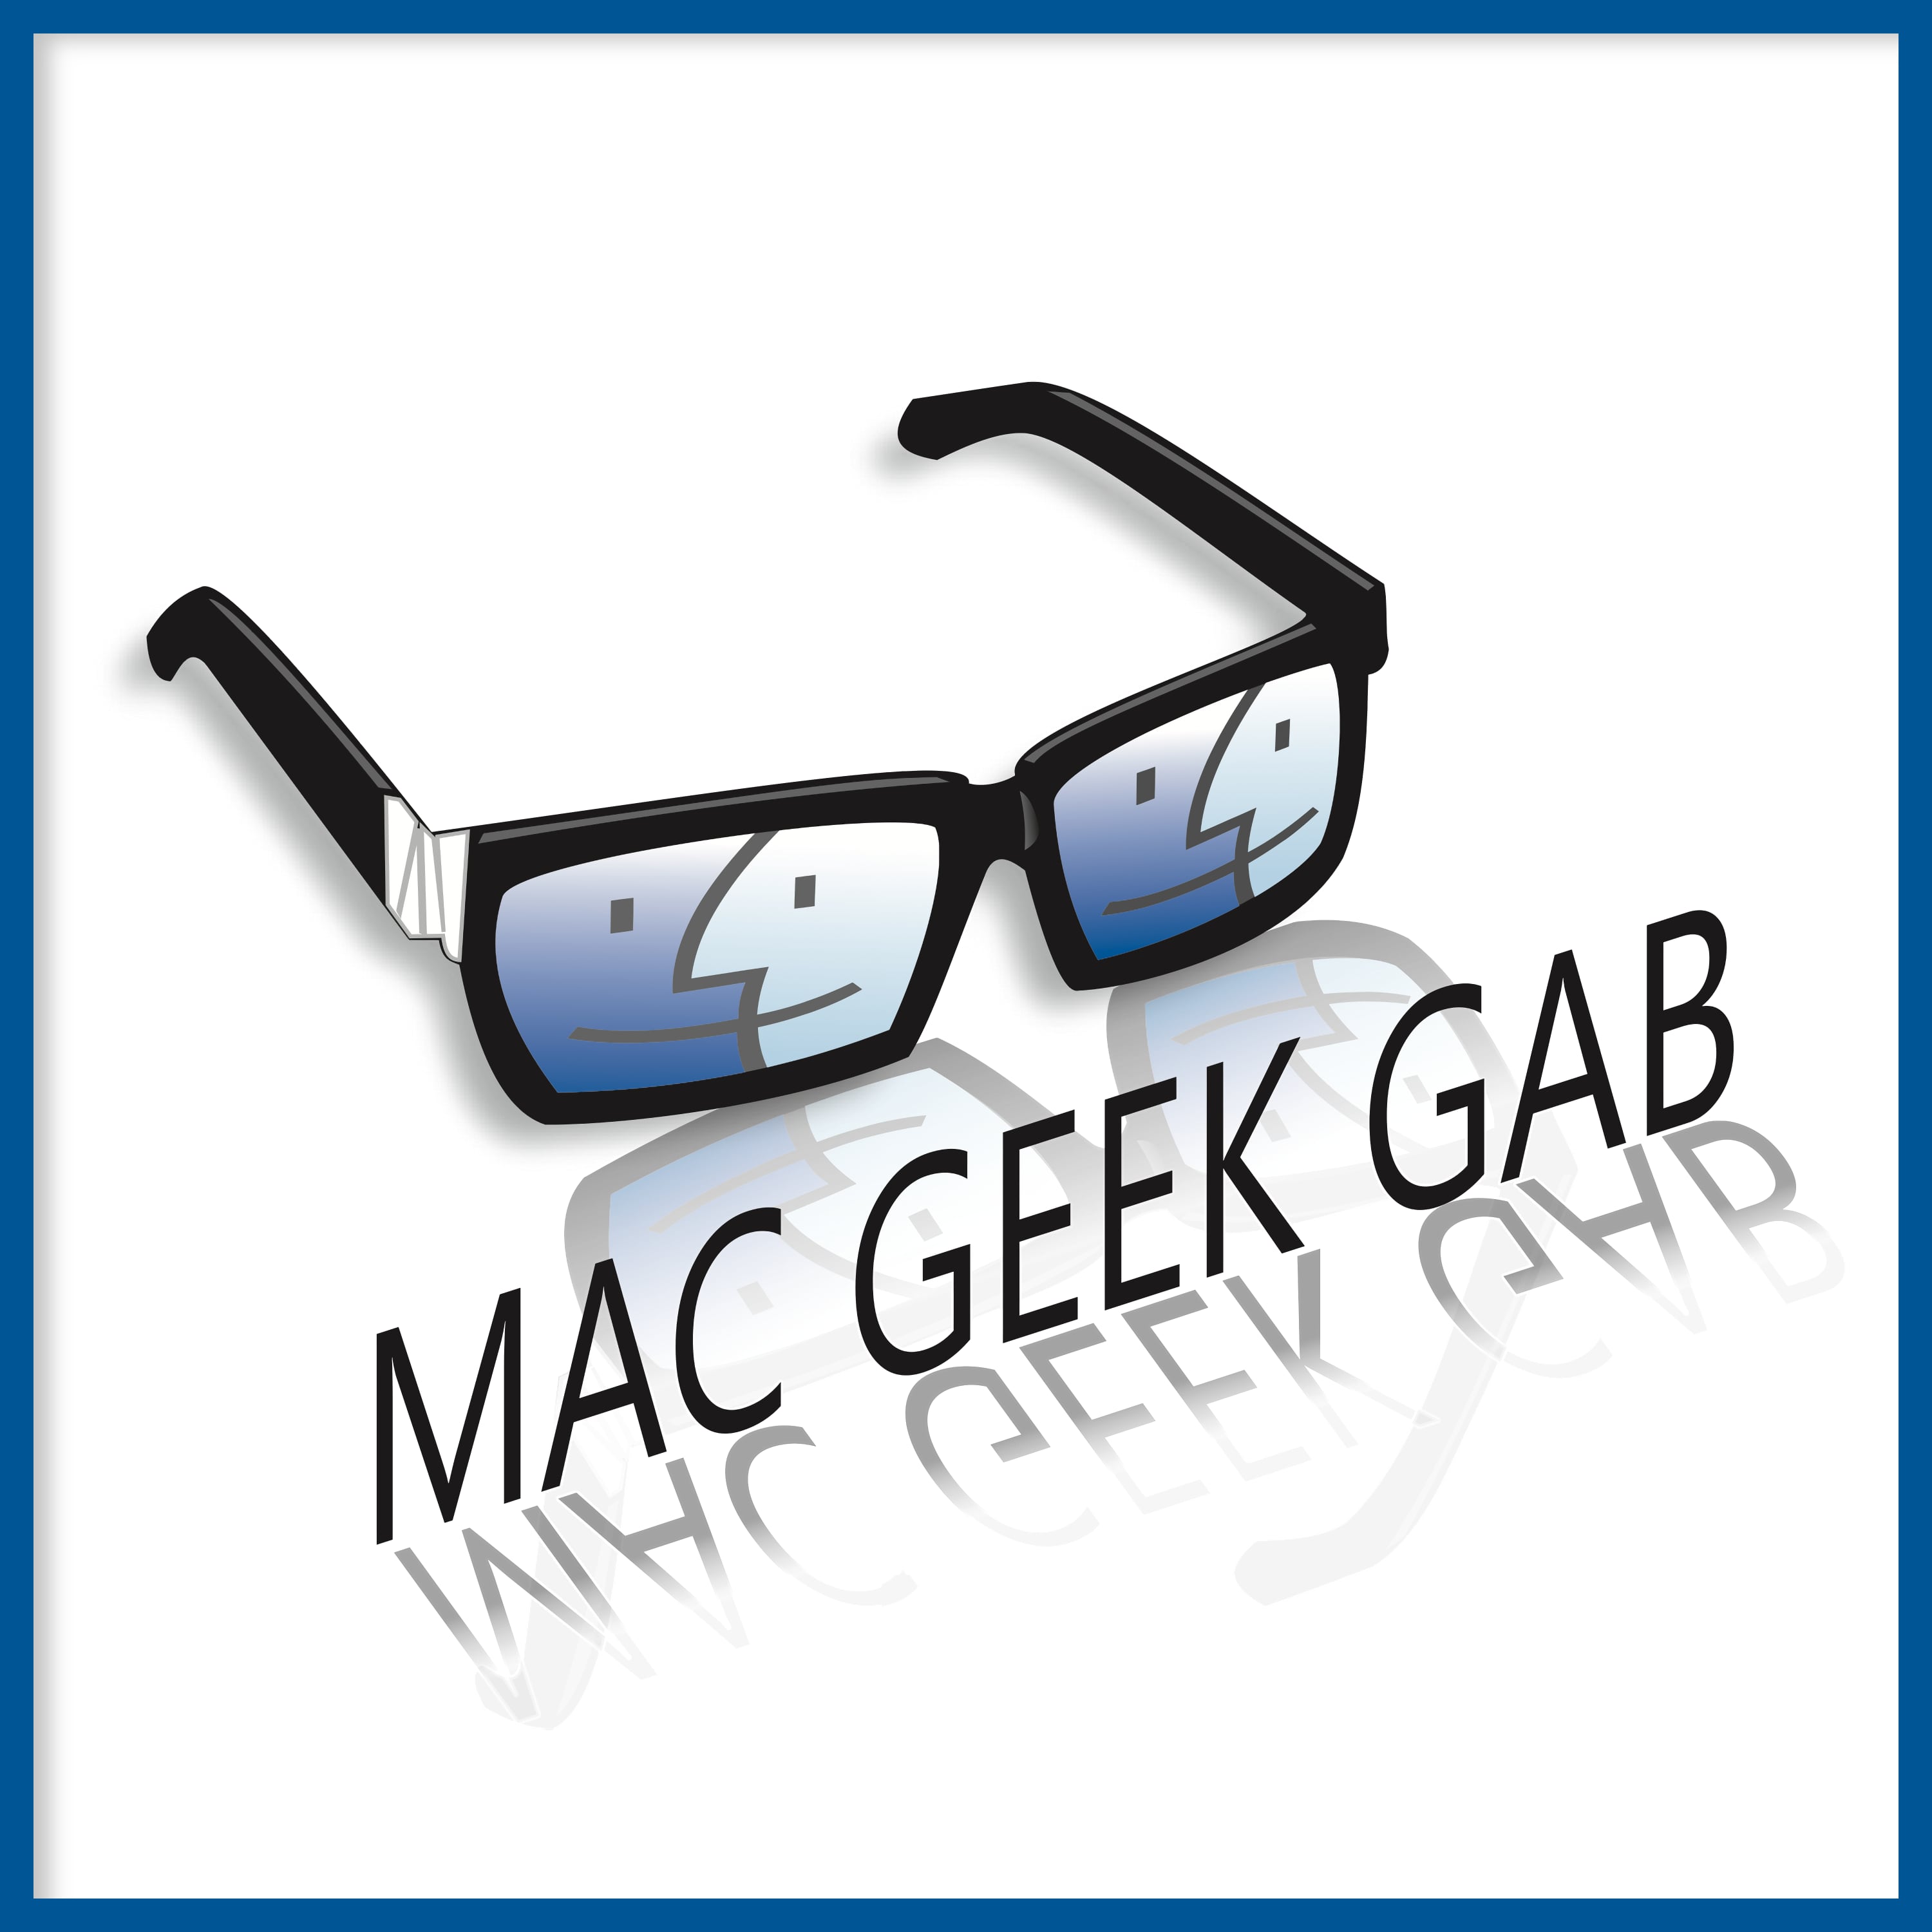 Mac Geek Gab podcast